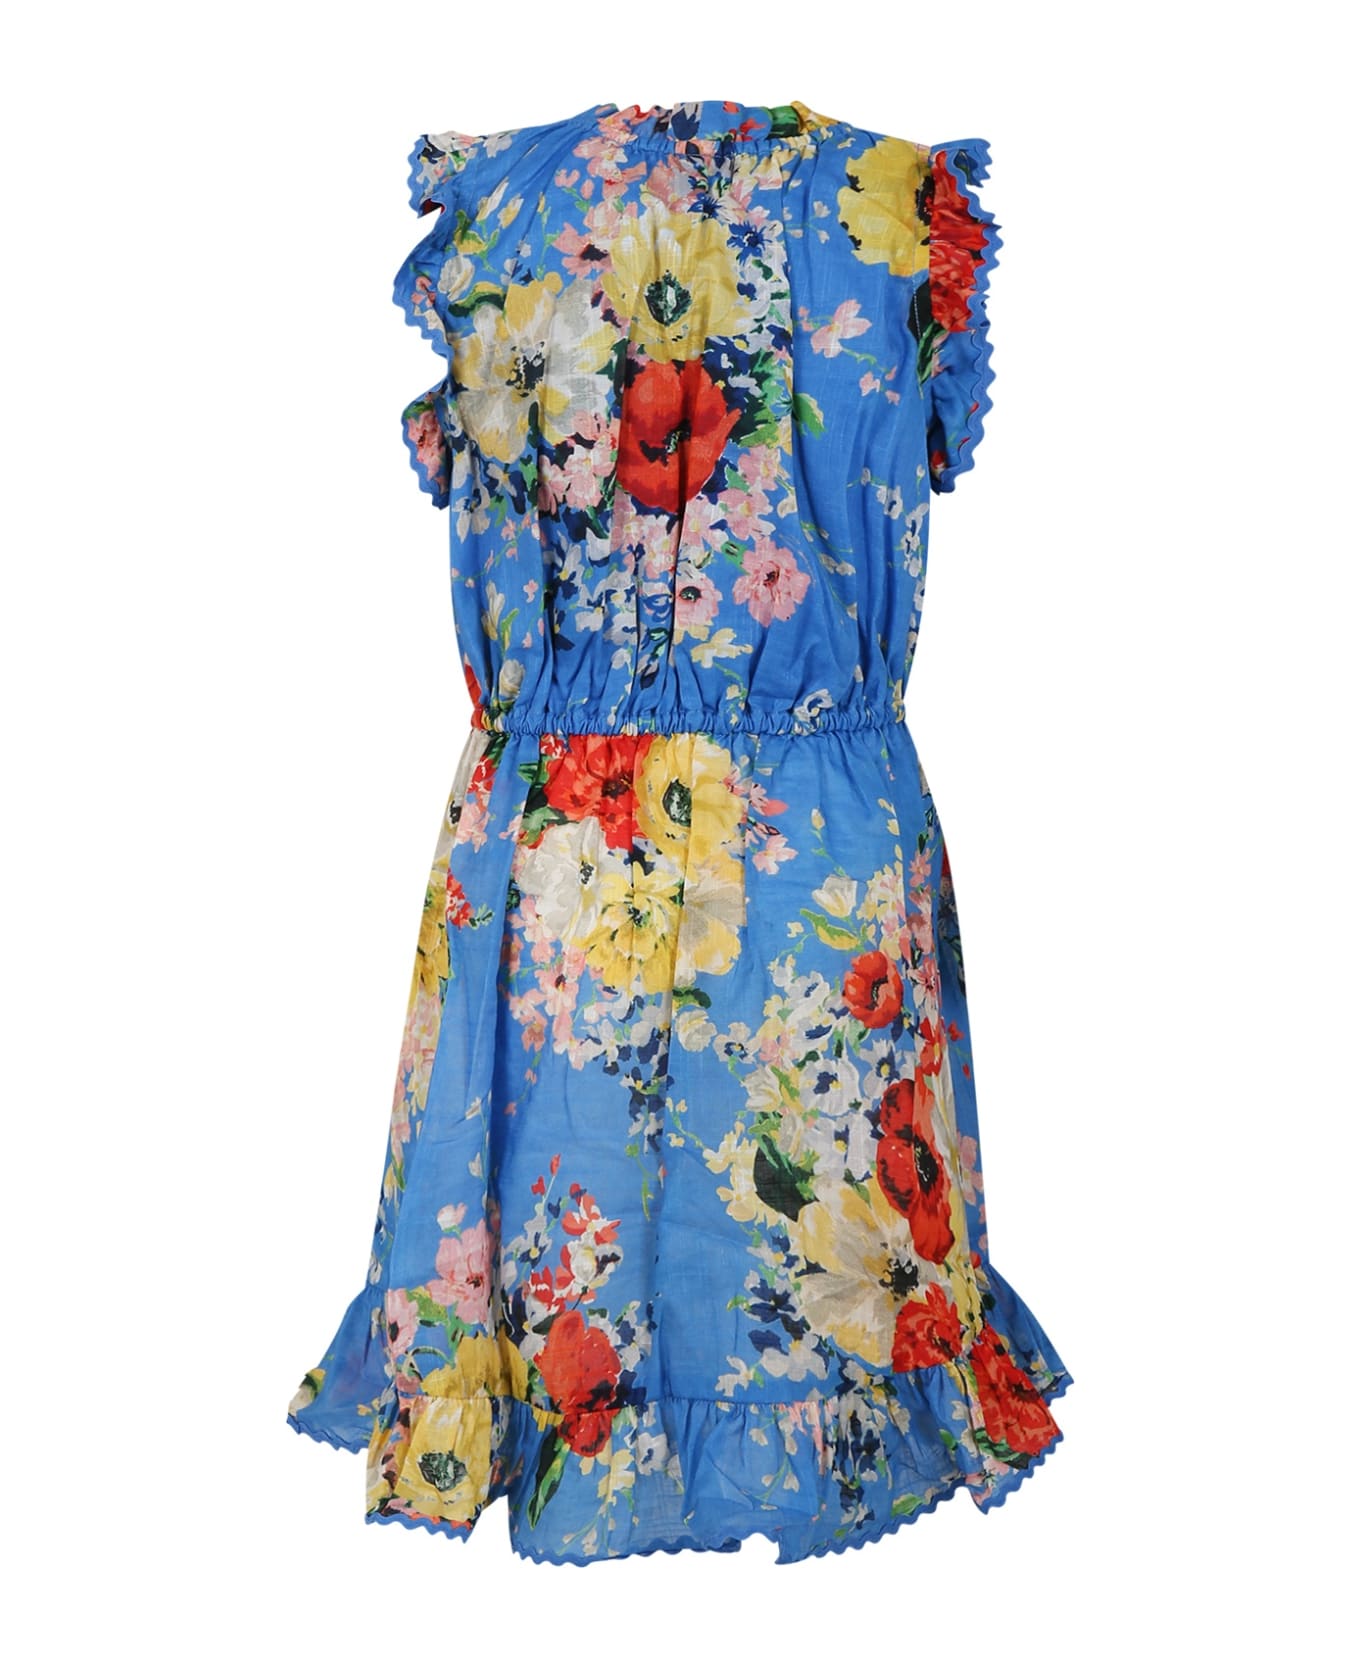 Zimmermann Light Blue Dress For Girl With Floral Print - Light Blue